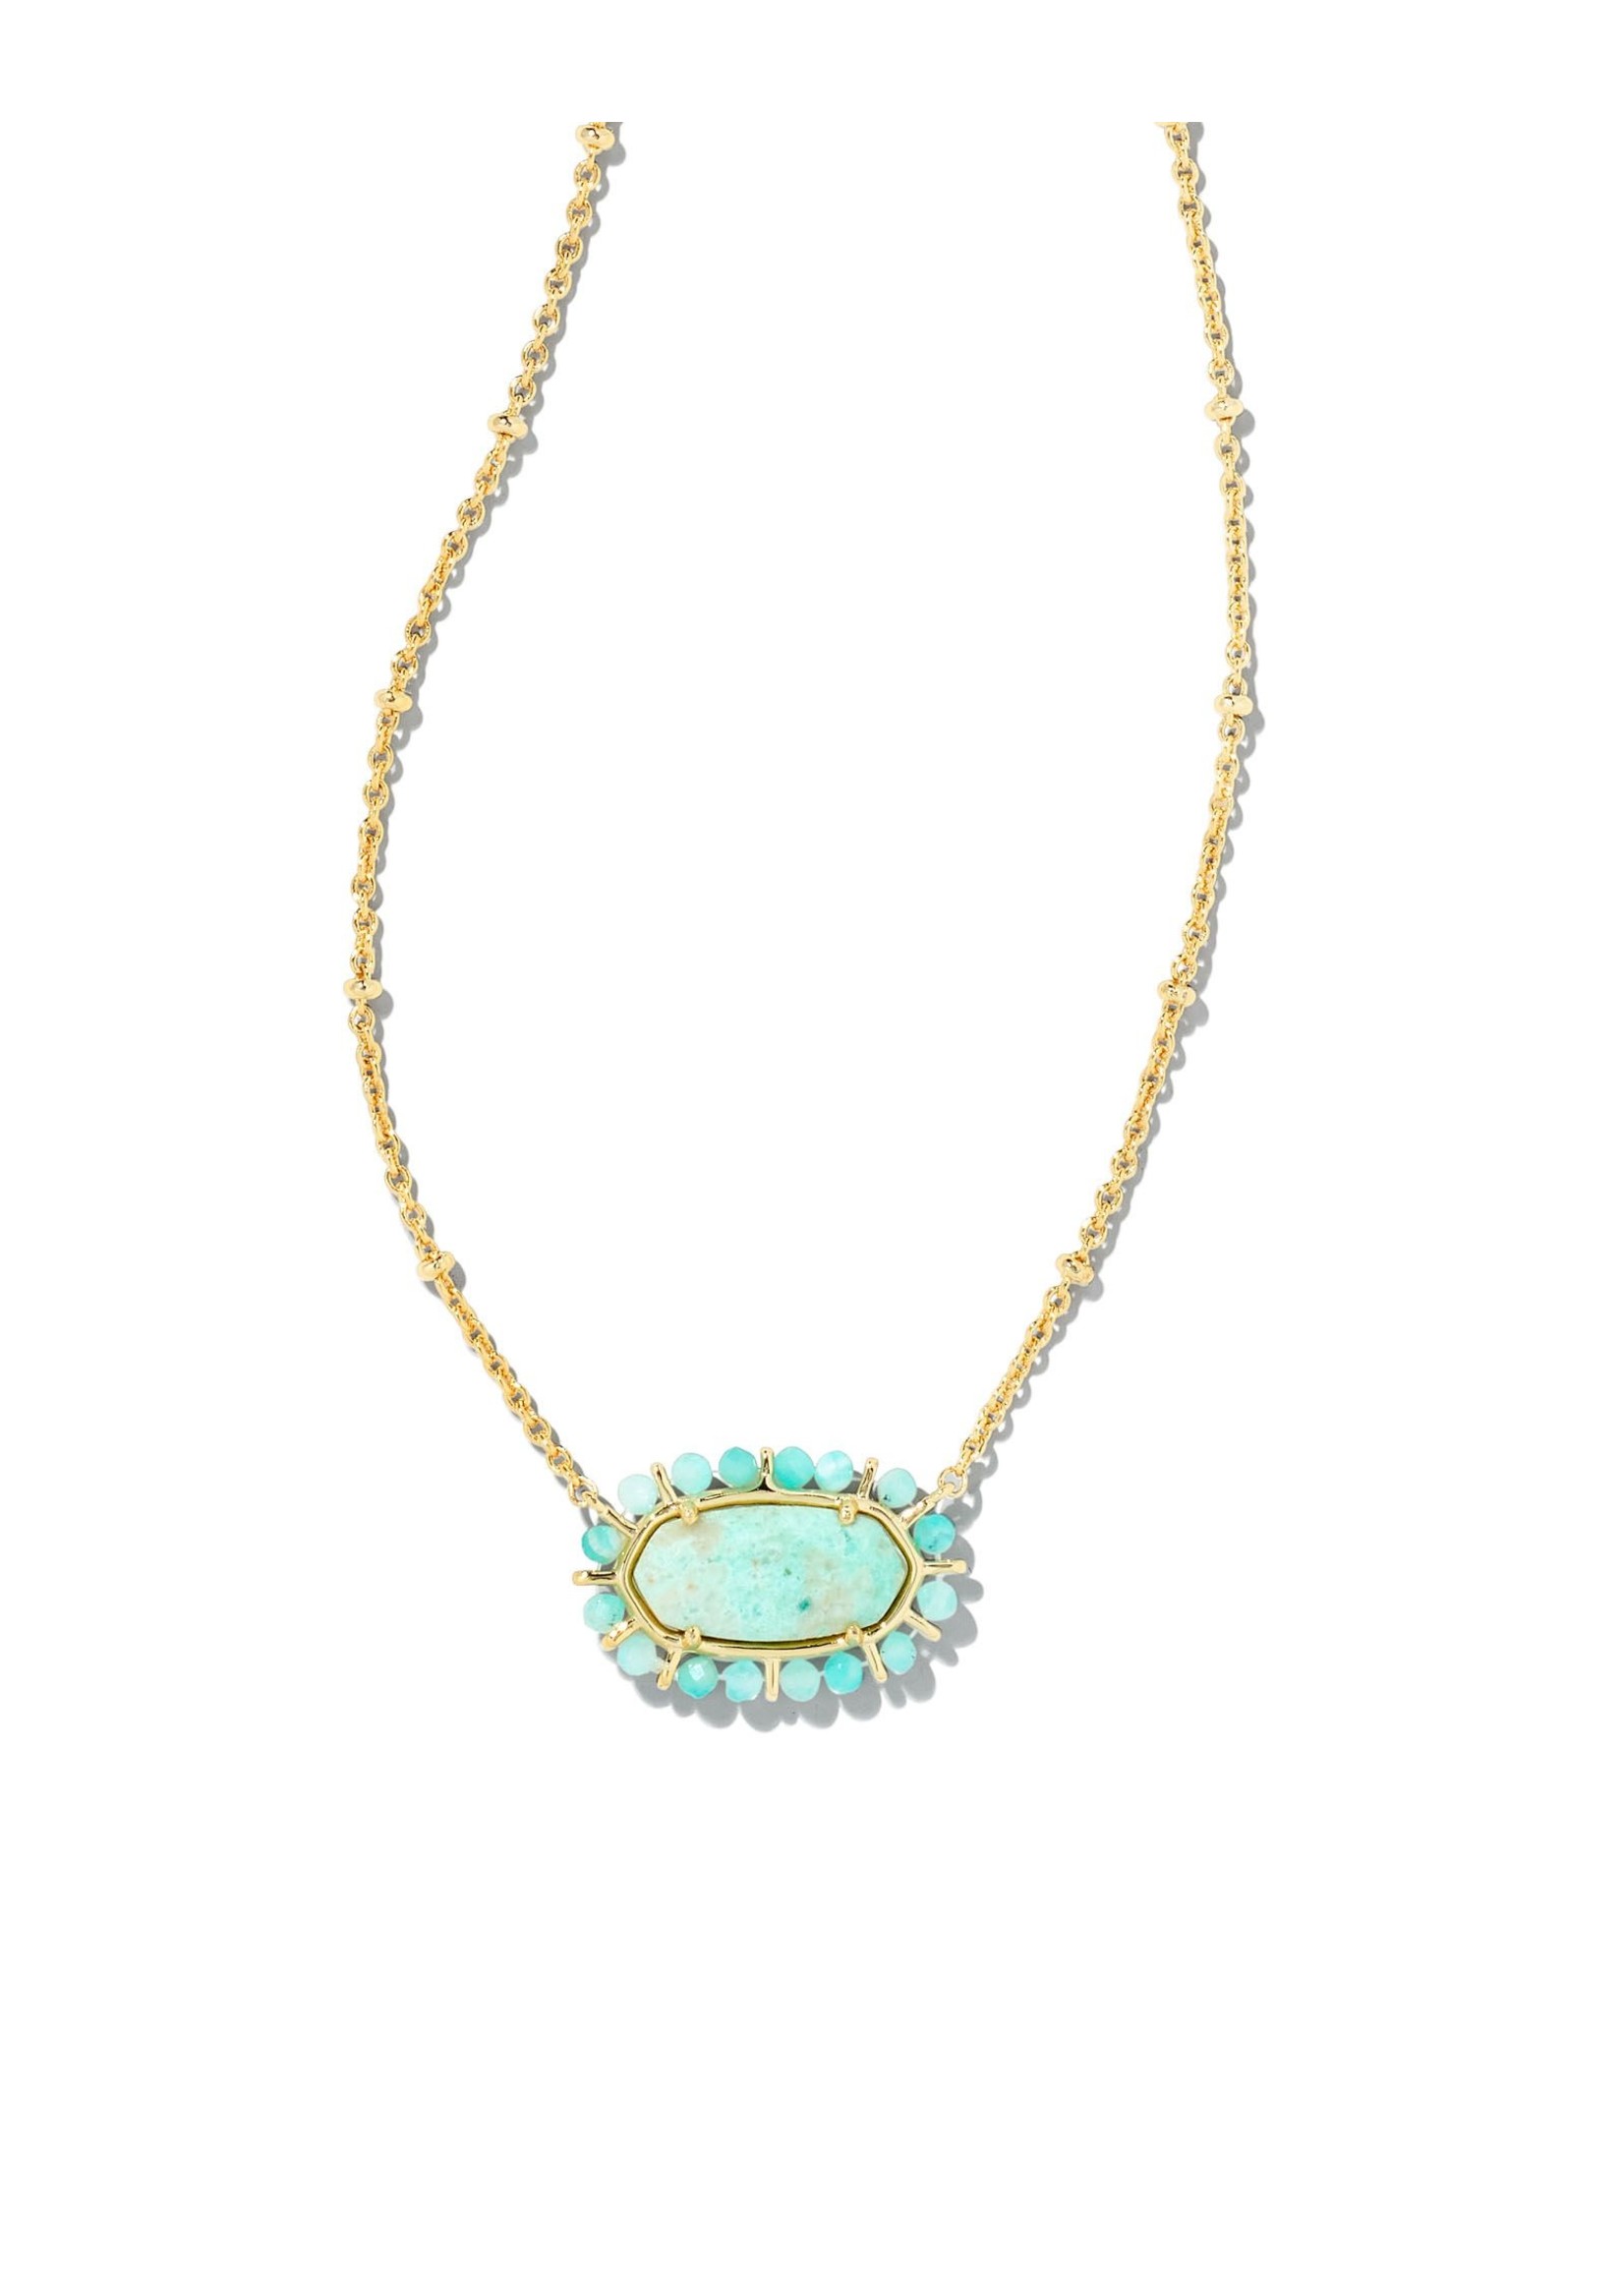 The Beaded Elisa Pendant Necklace